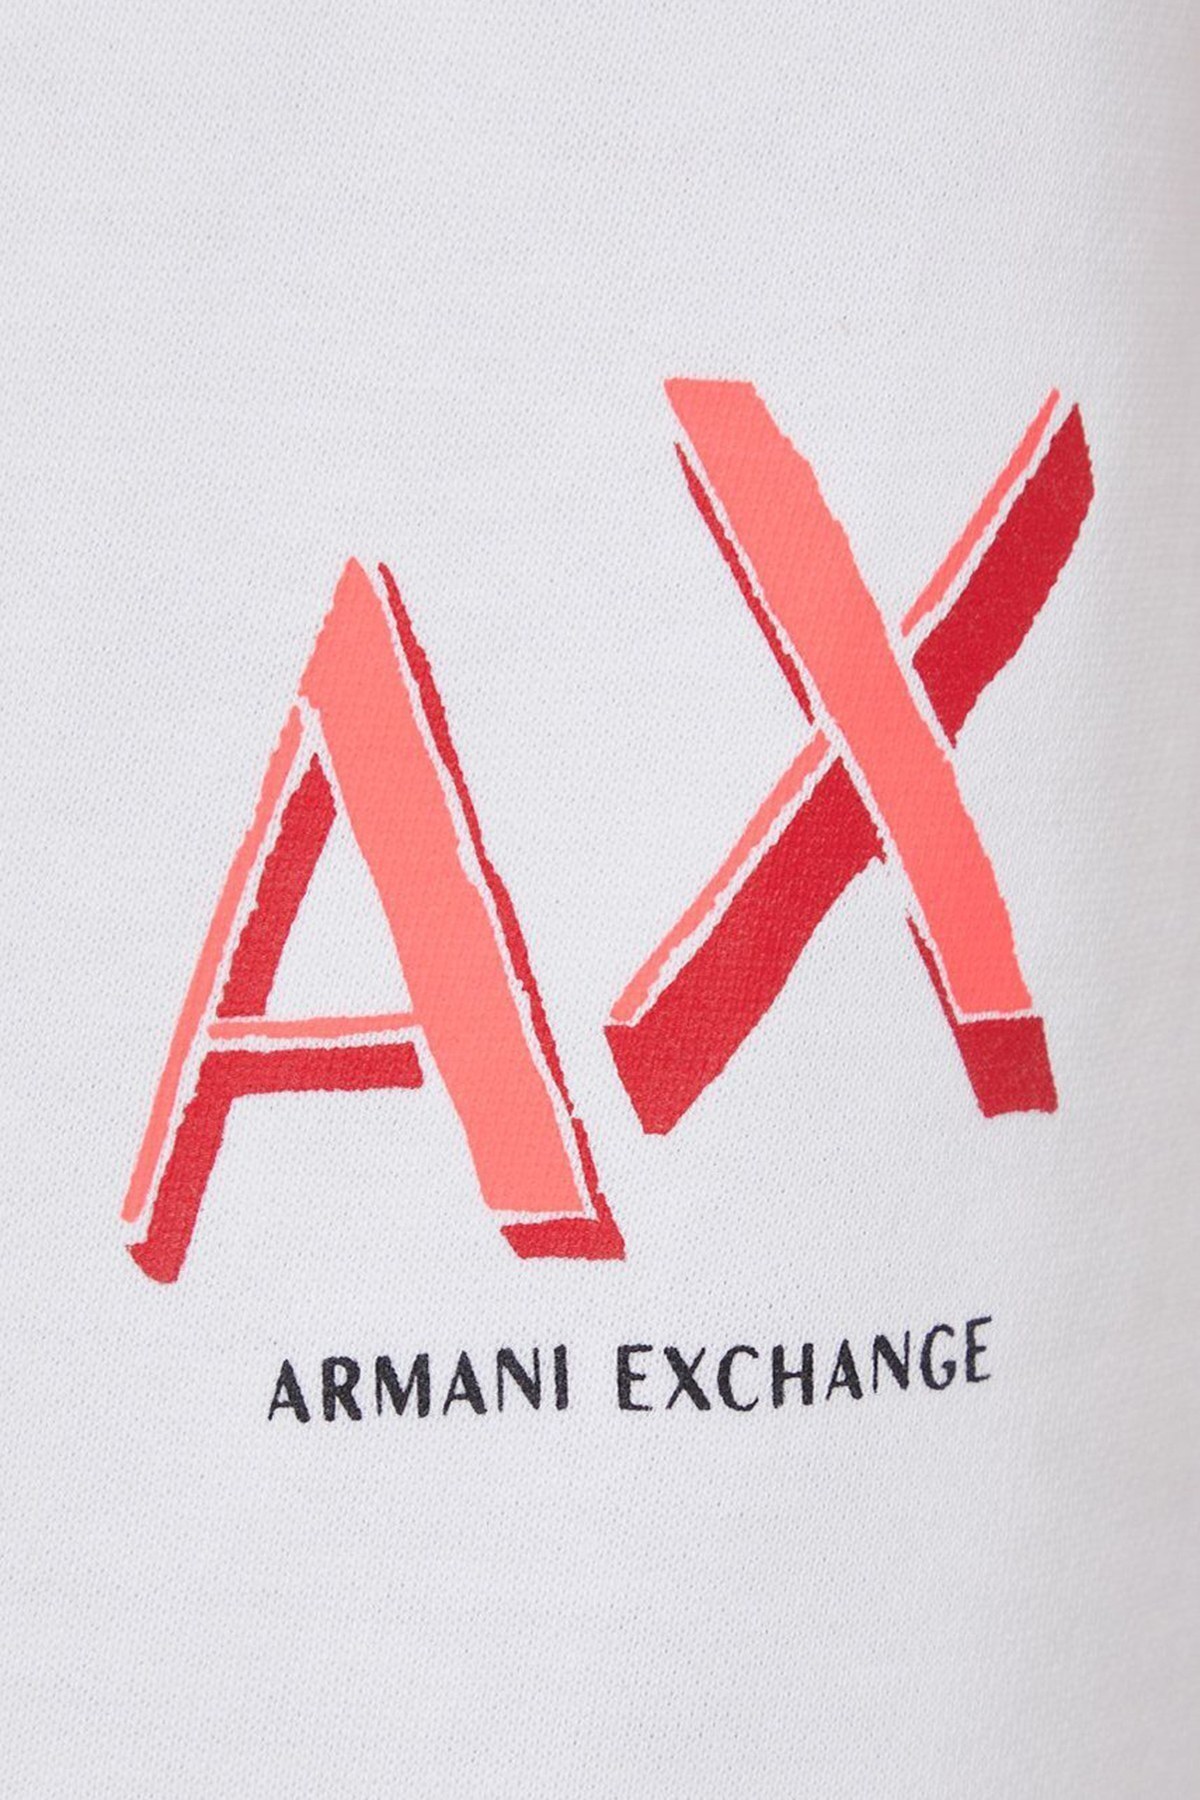 Armani Exchange Logo Baskılı Relaxed Fit % 100 Pamuk Bayan Elbise 3LYA86 YJ4XZ 1100 BEYAZ